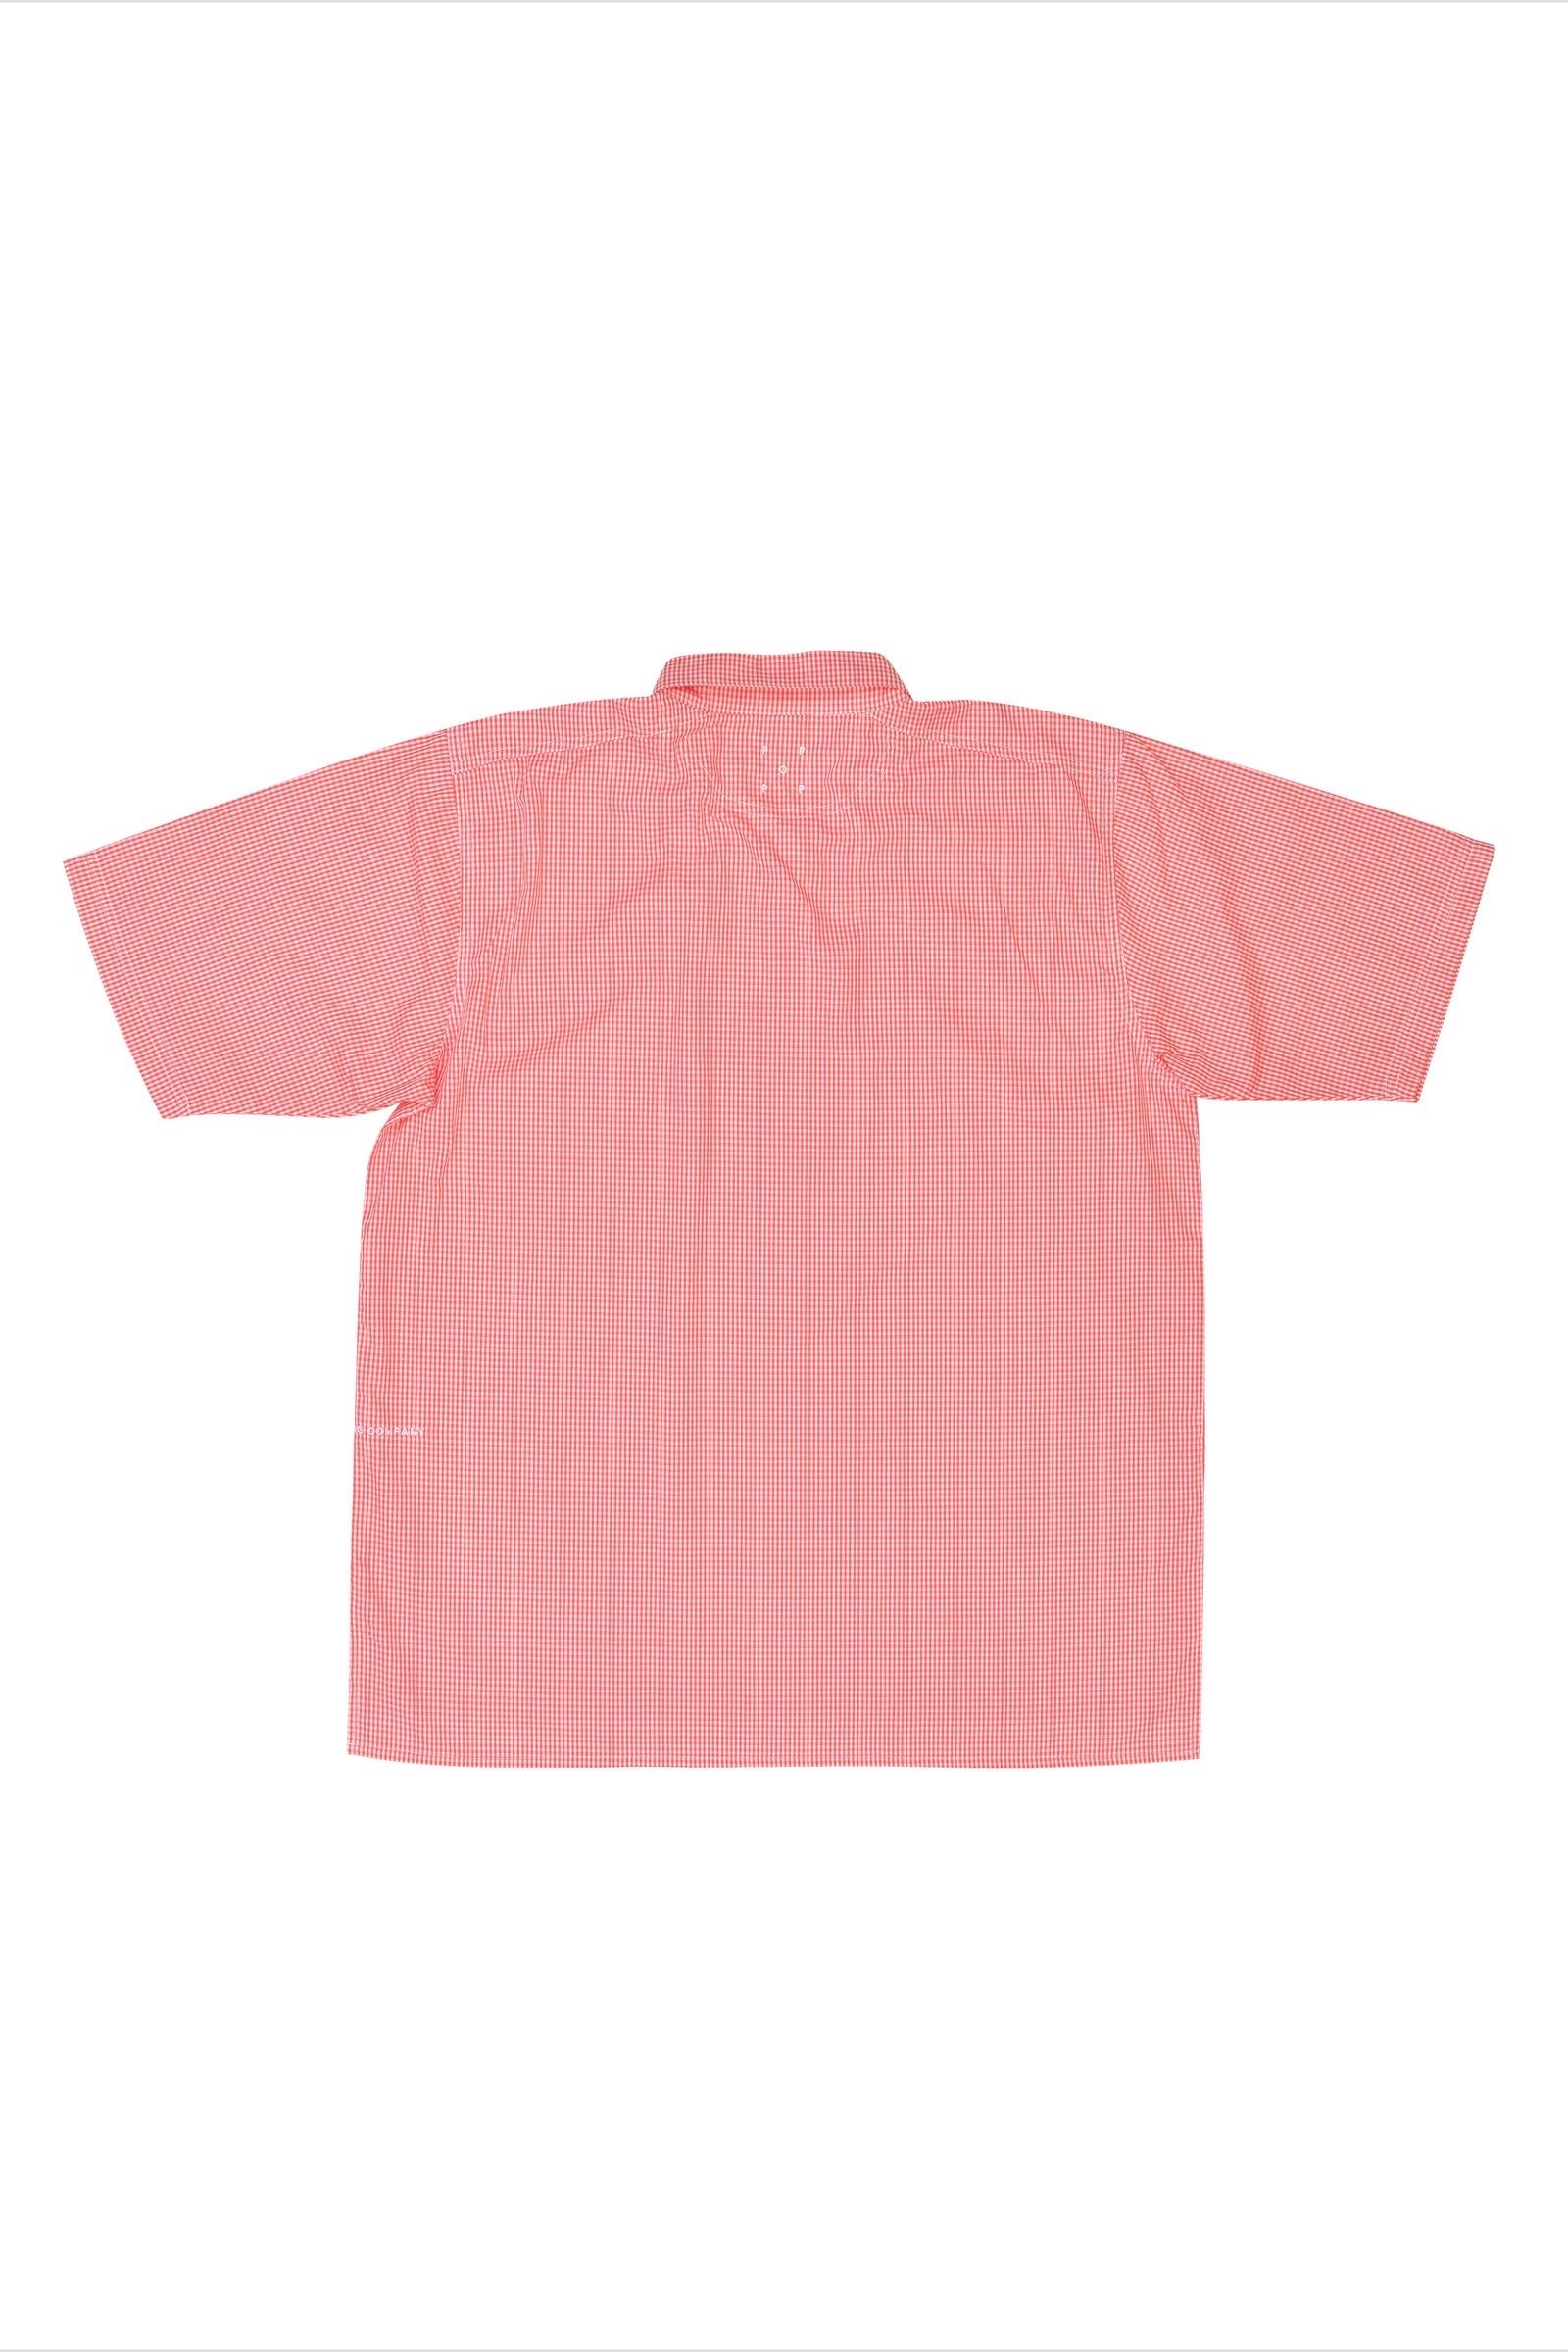 Pop Trading Company - italo shirt -orange gingham-22ss drop2